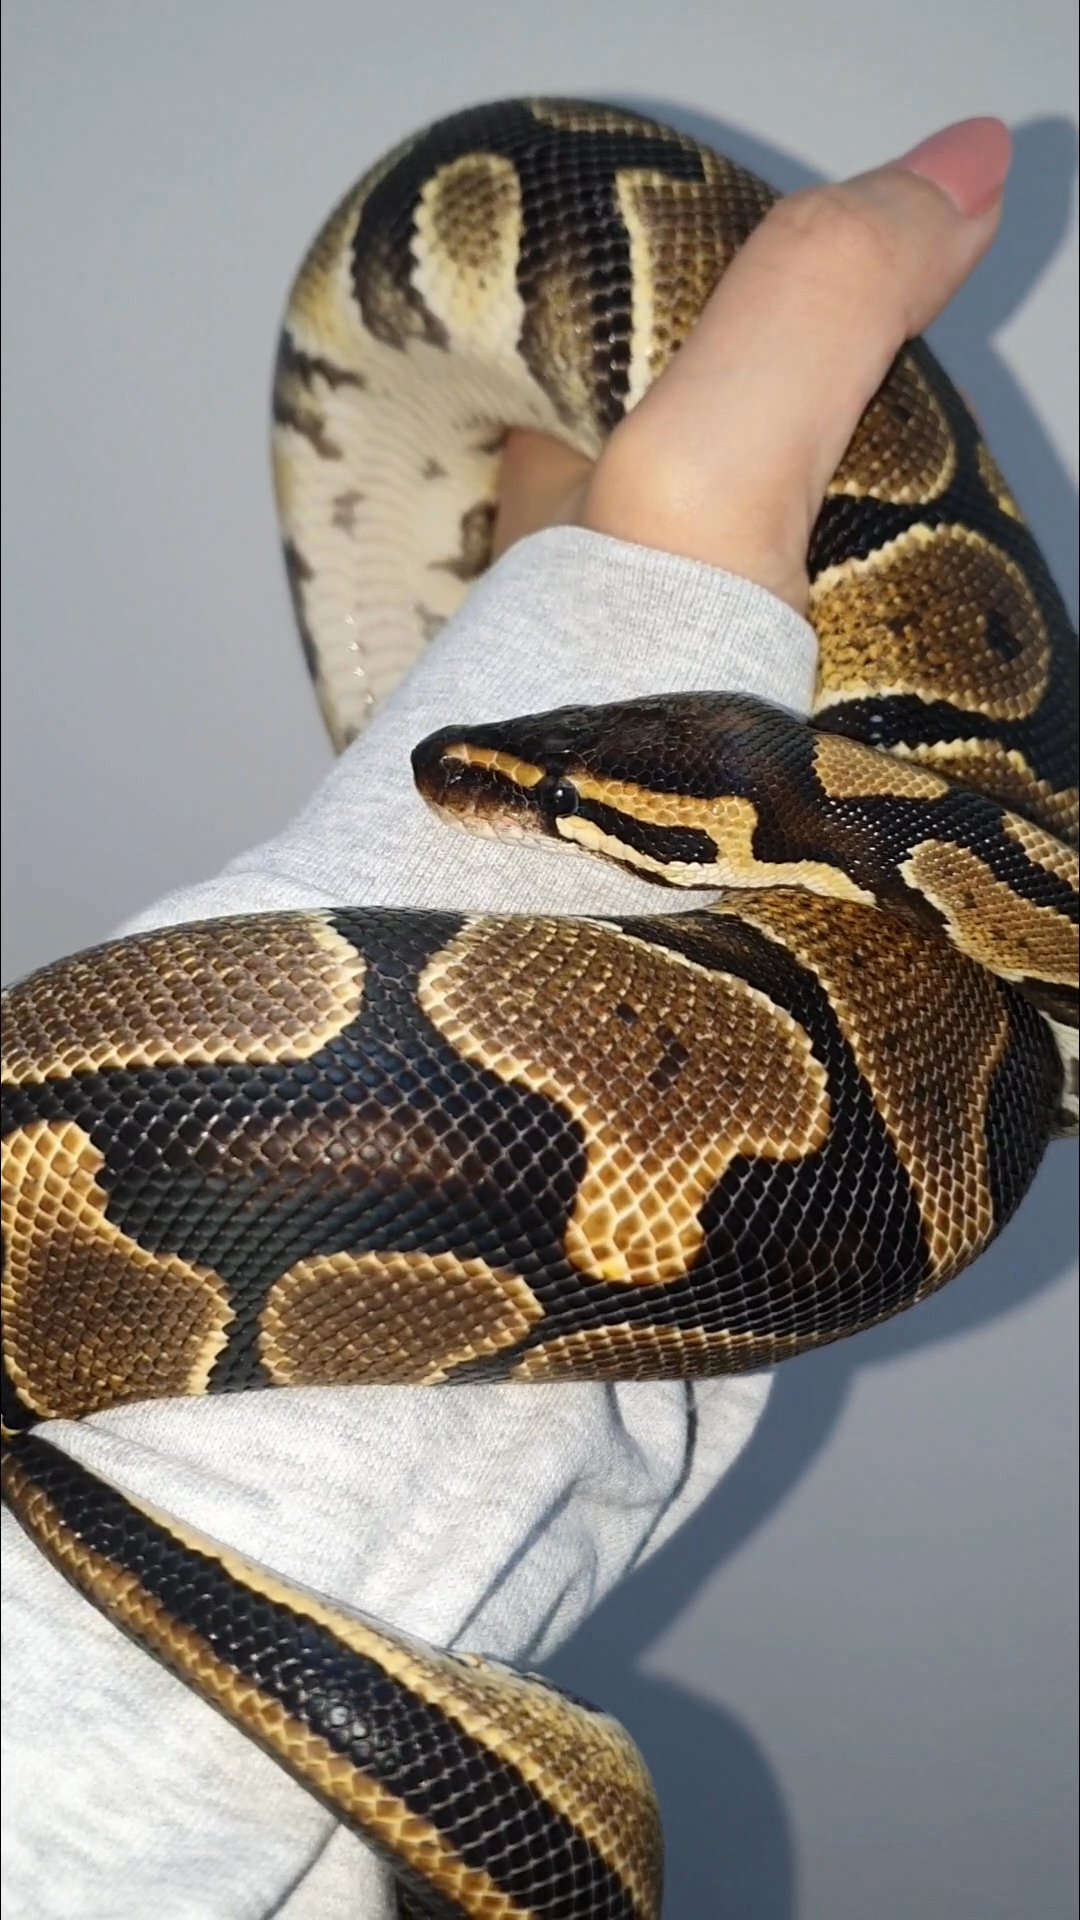 Normal ball python in Abu Dhabi